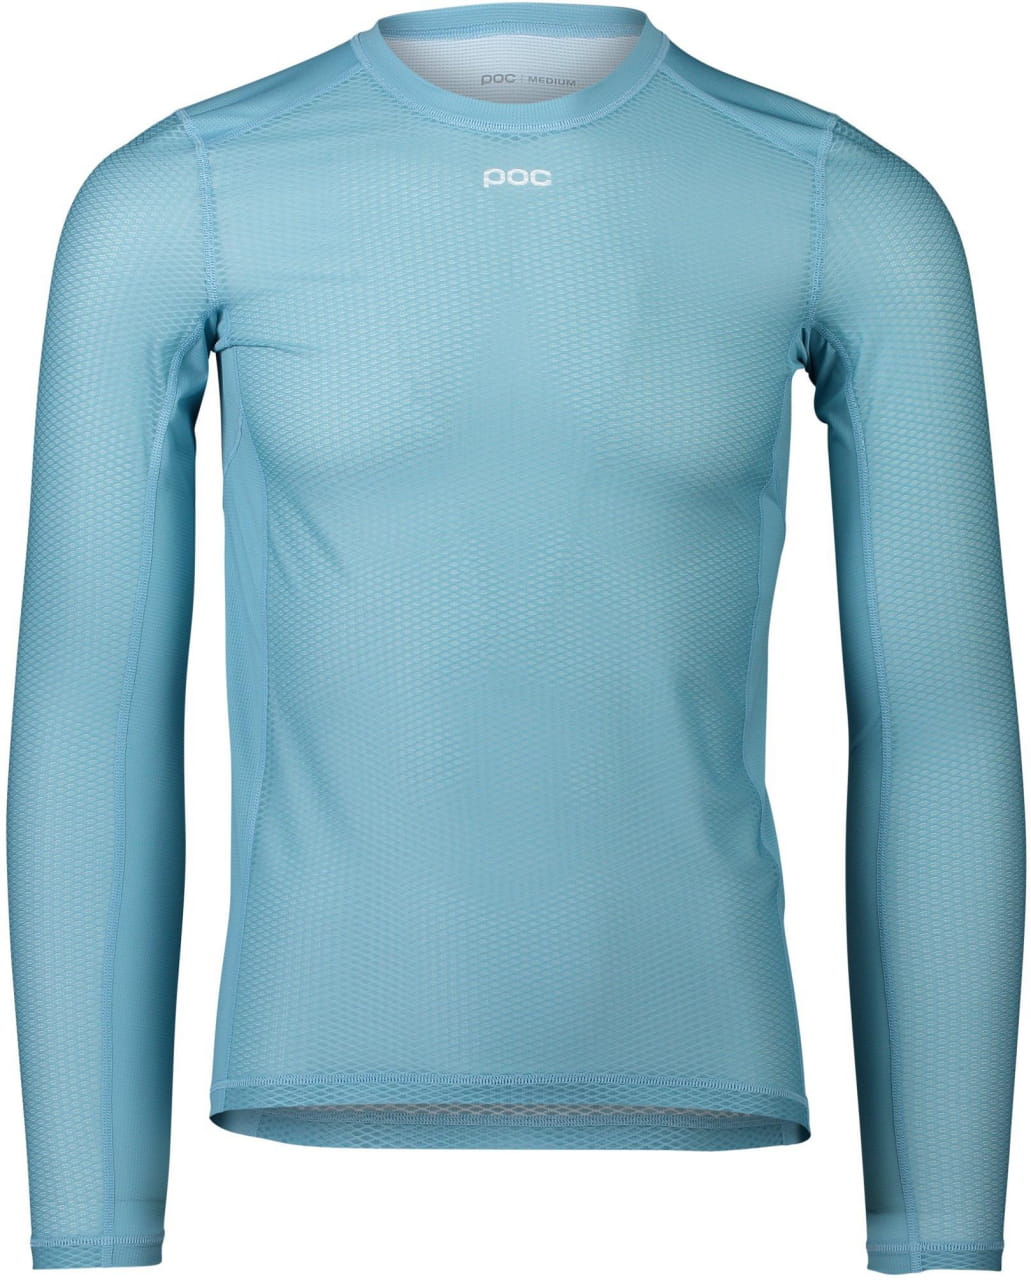 Unisex jersey POC Essential Layer Ls Jersey